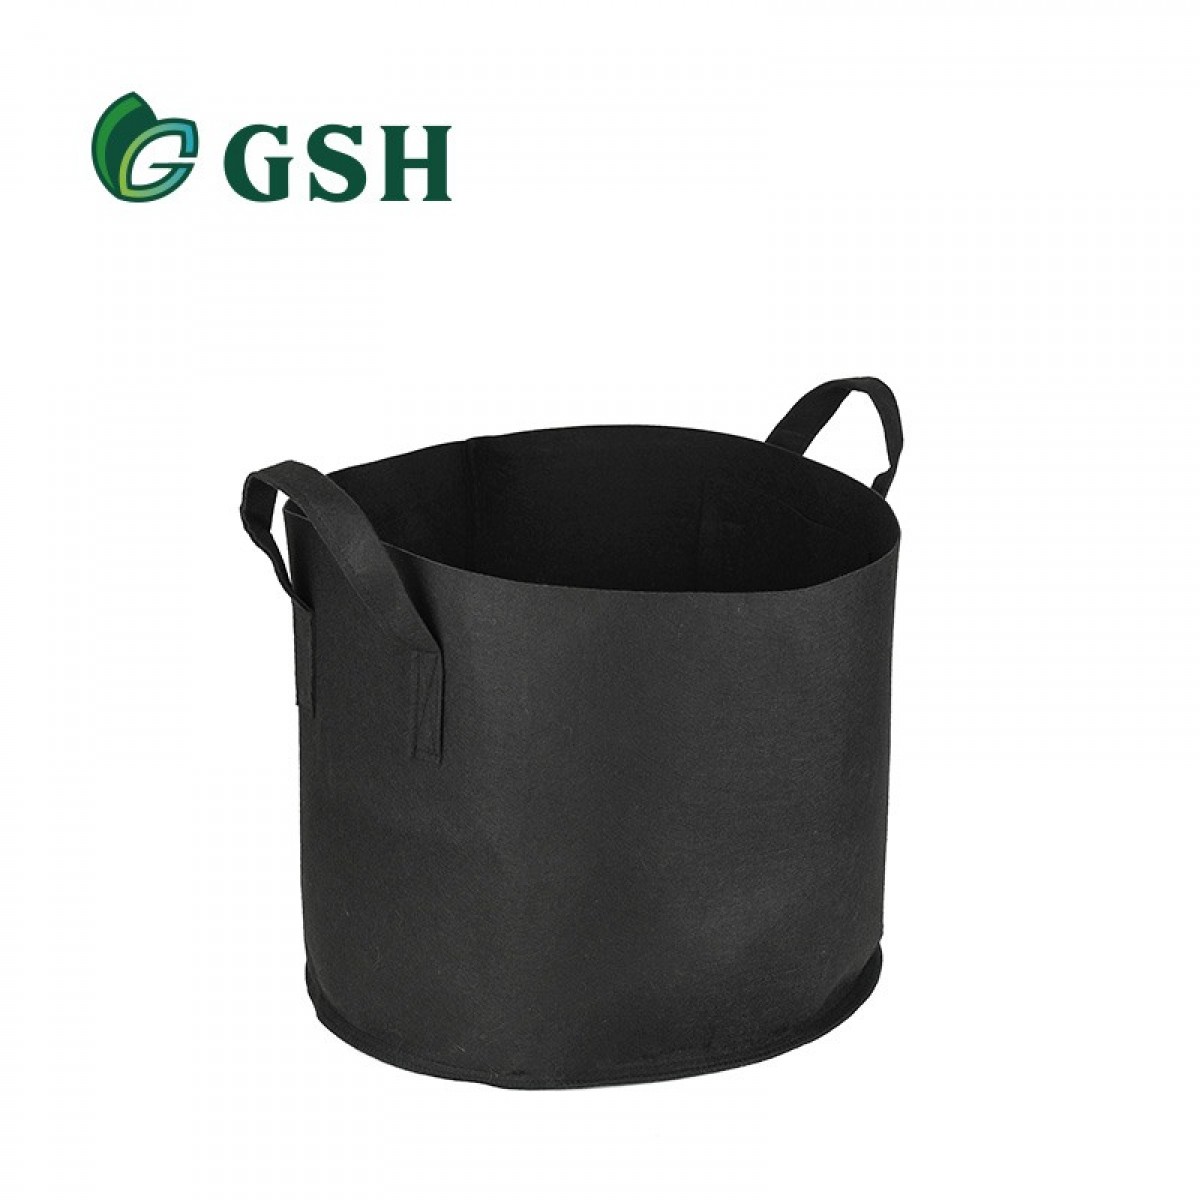 GSH Gardener's Grow Bag (15Gal)